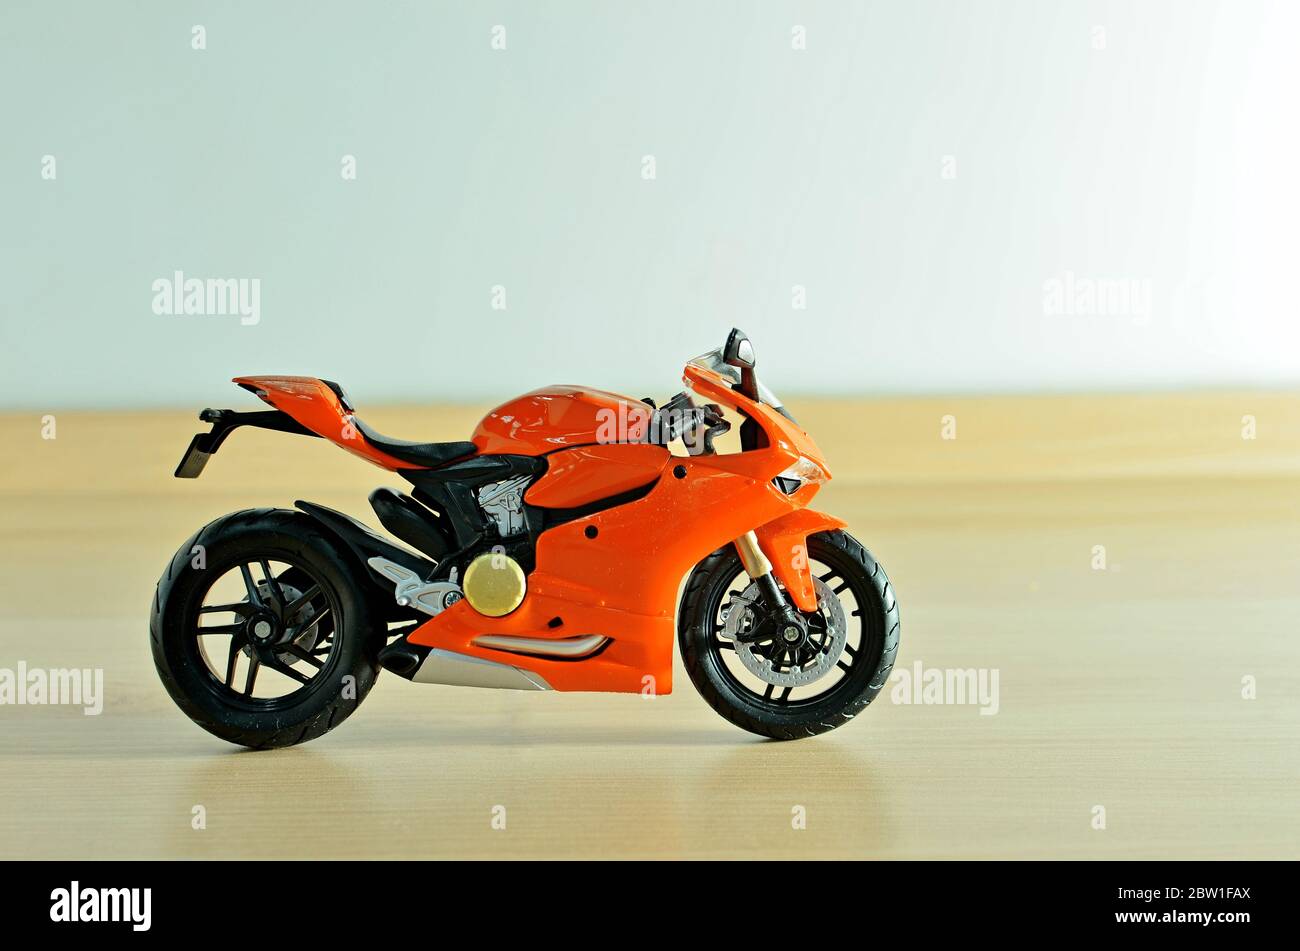 Orange motorcycle toy with background Stock Photo